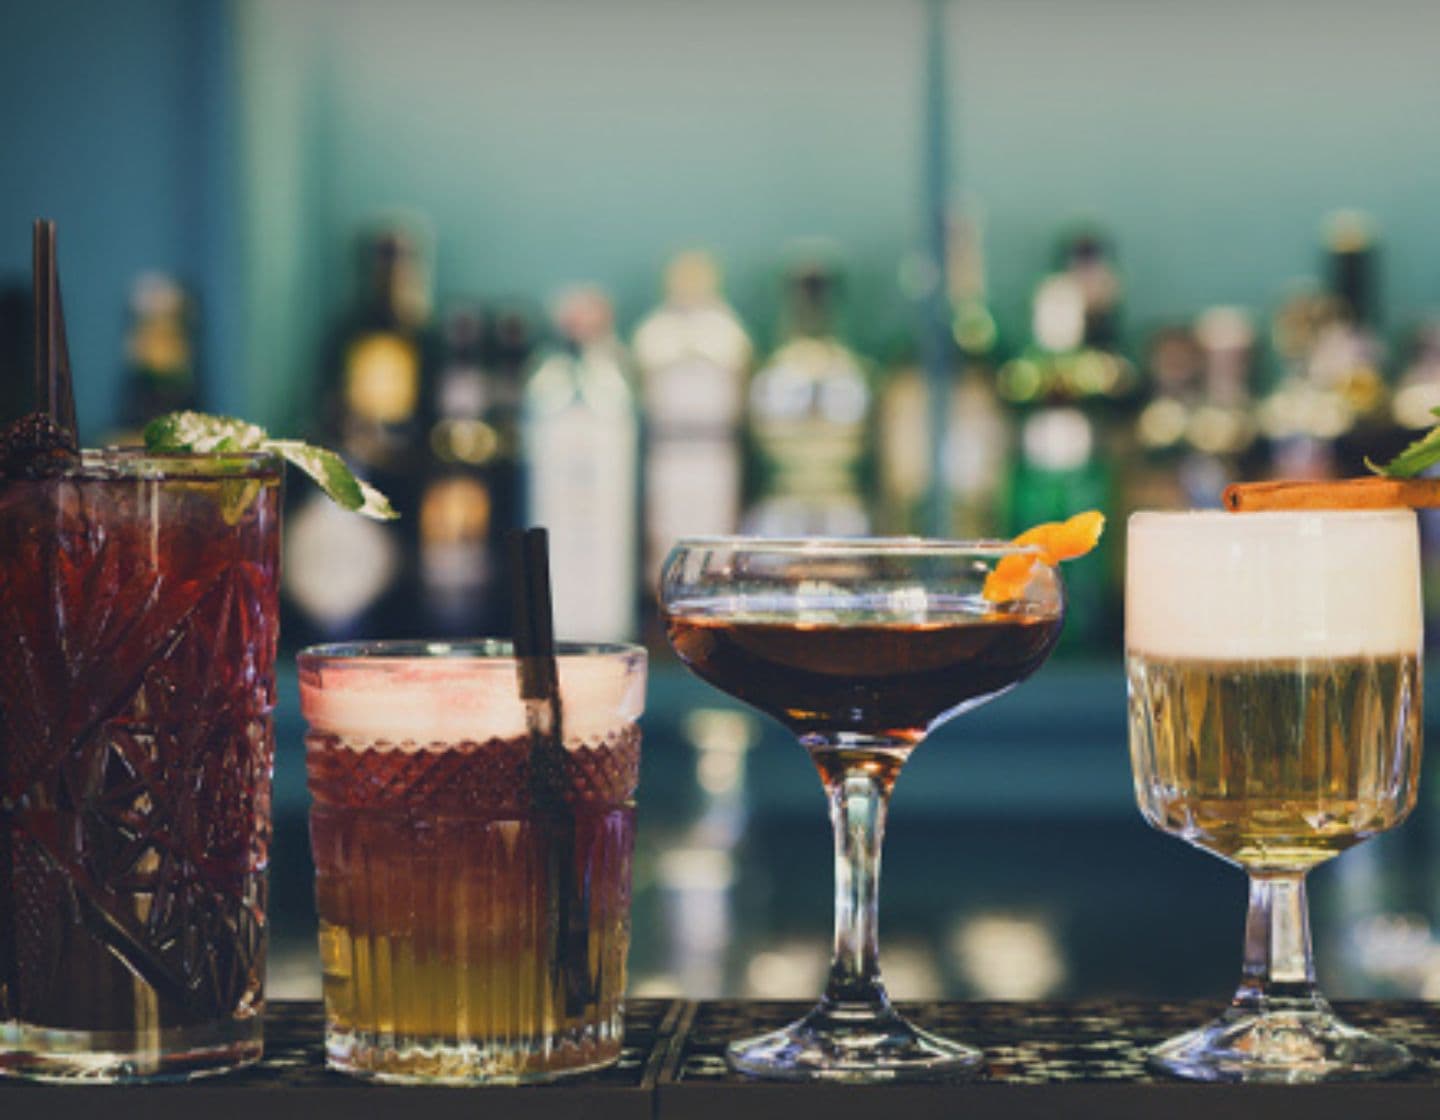 Four different garnished cocktails lined along a bar.